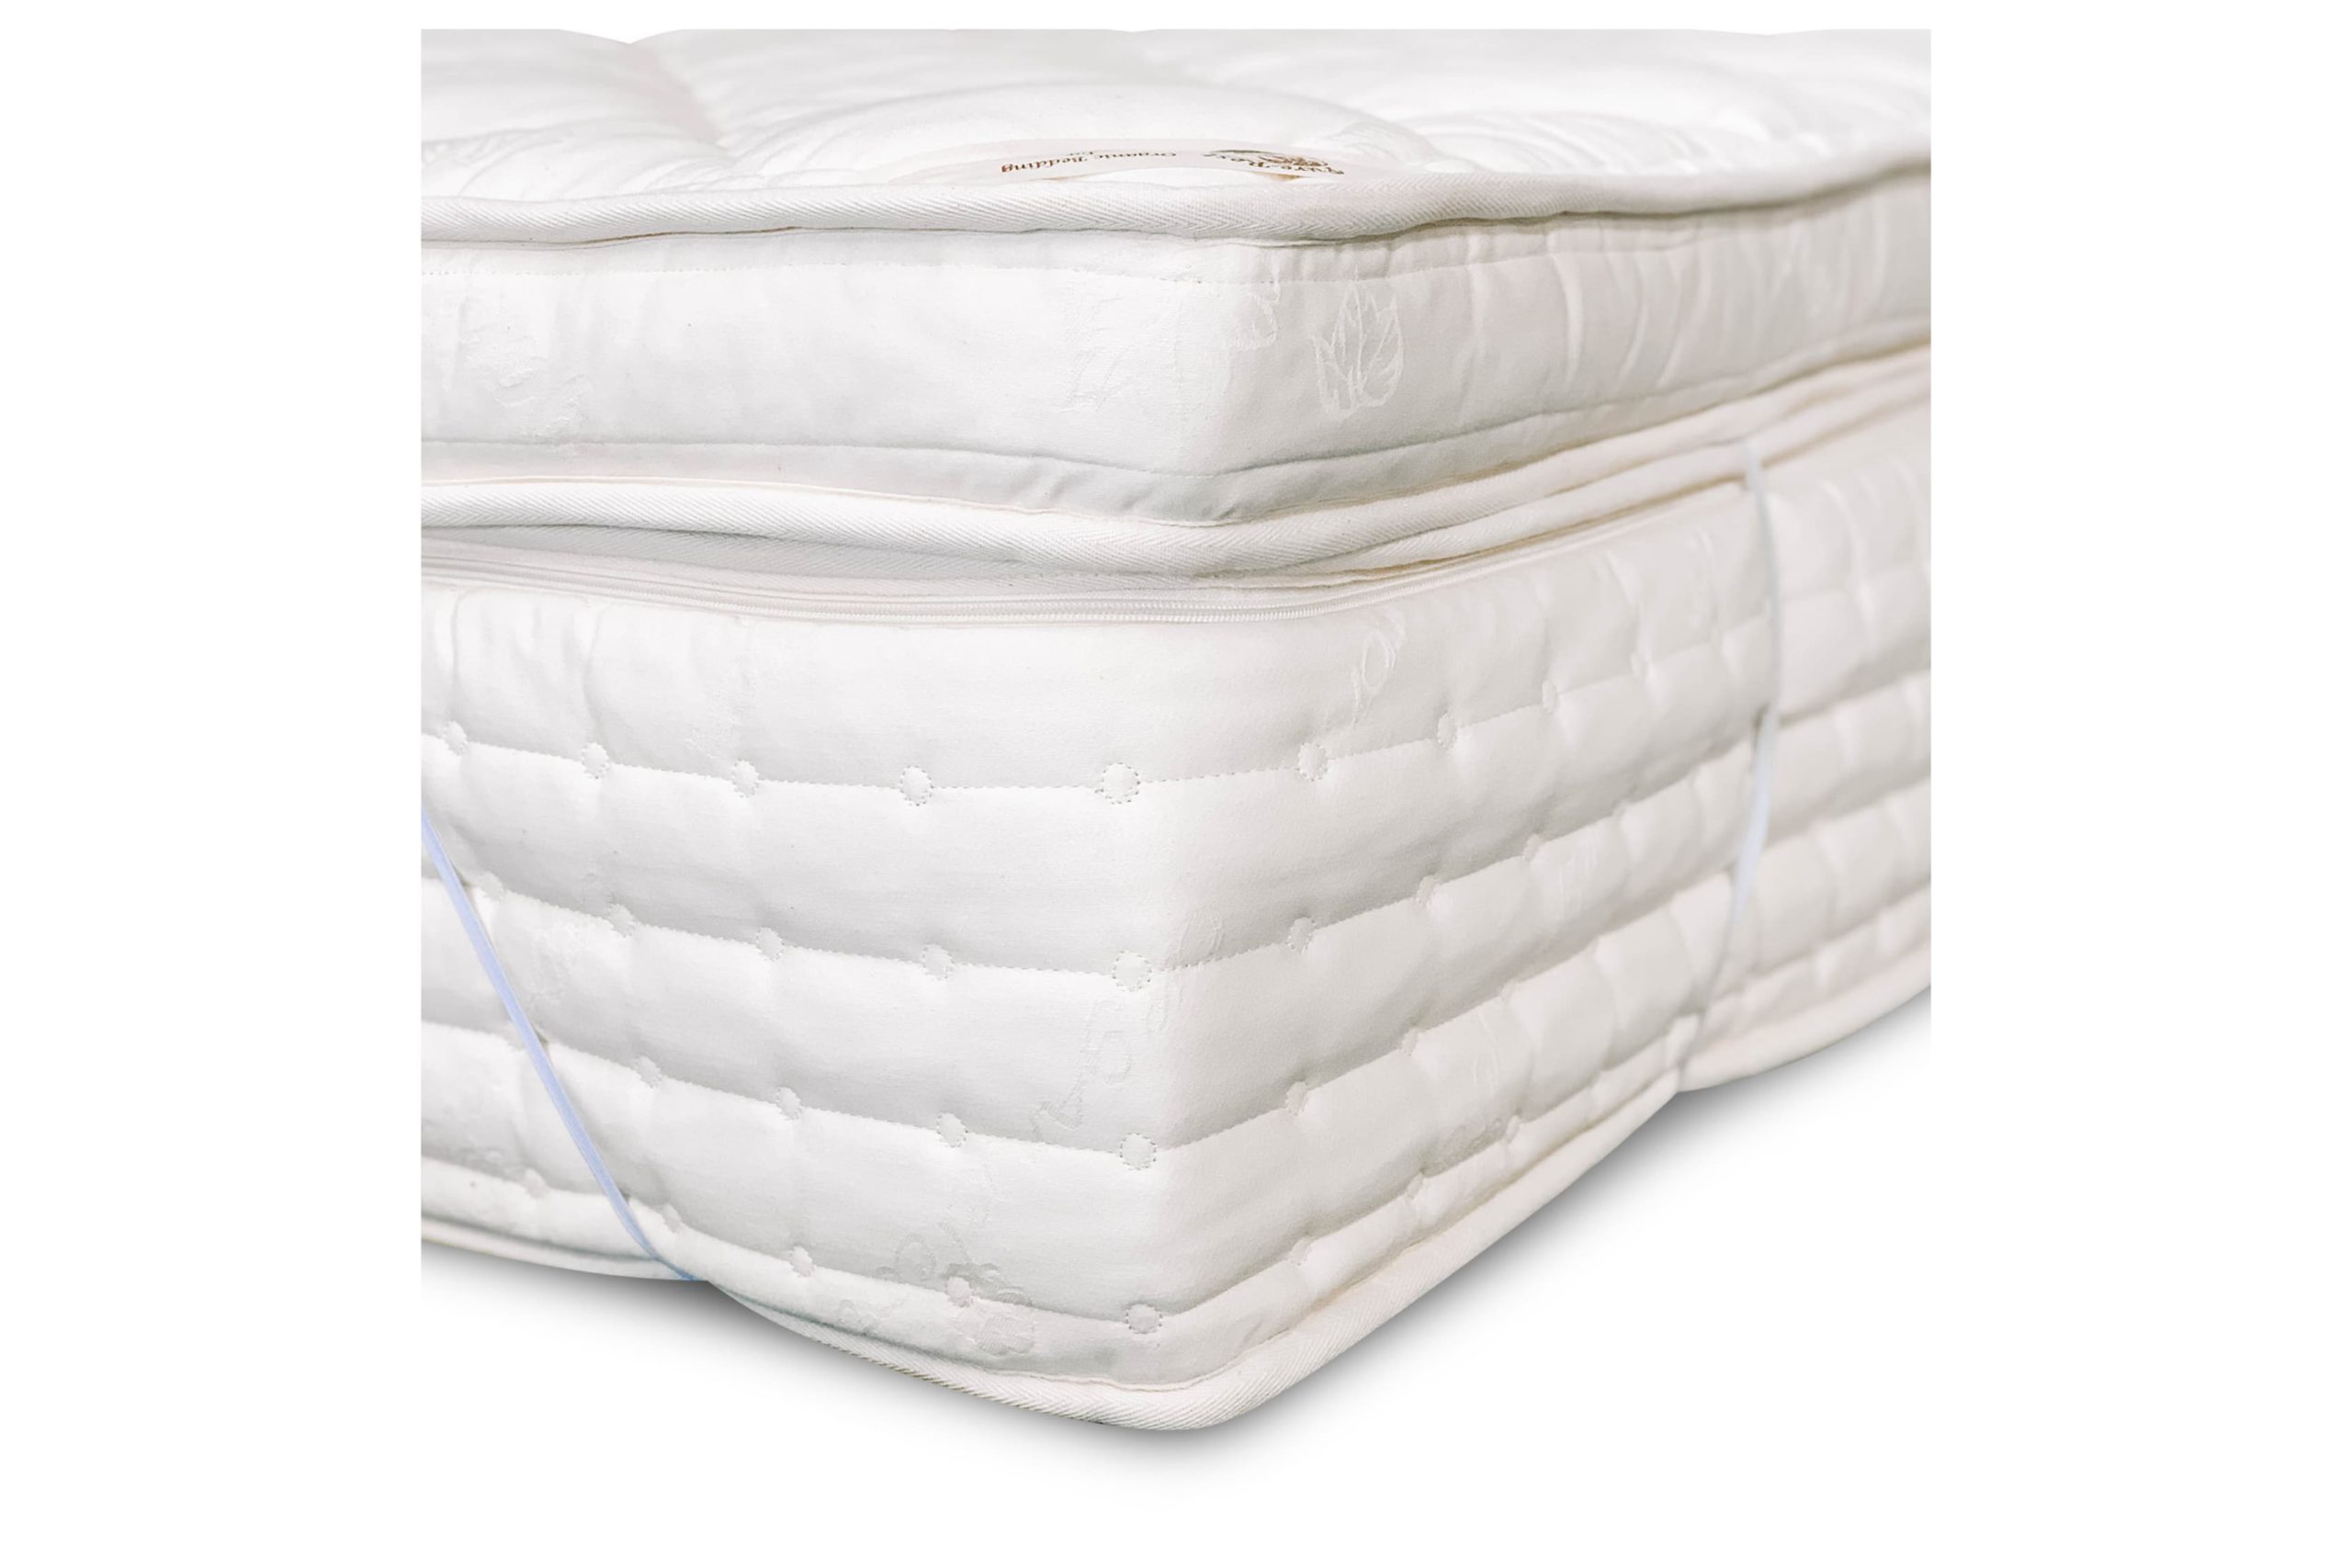 latex or wool mattress topper